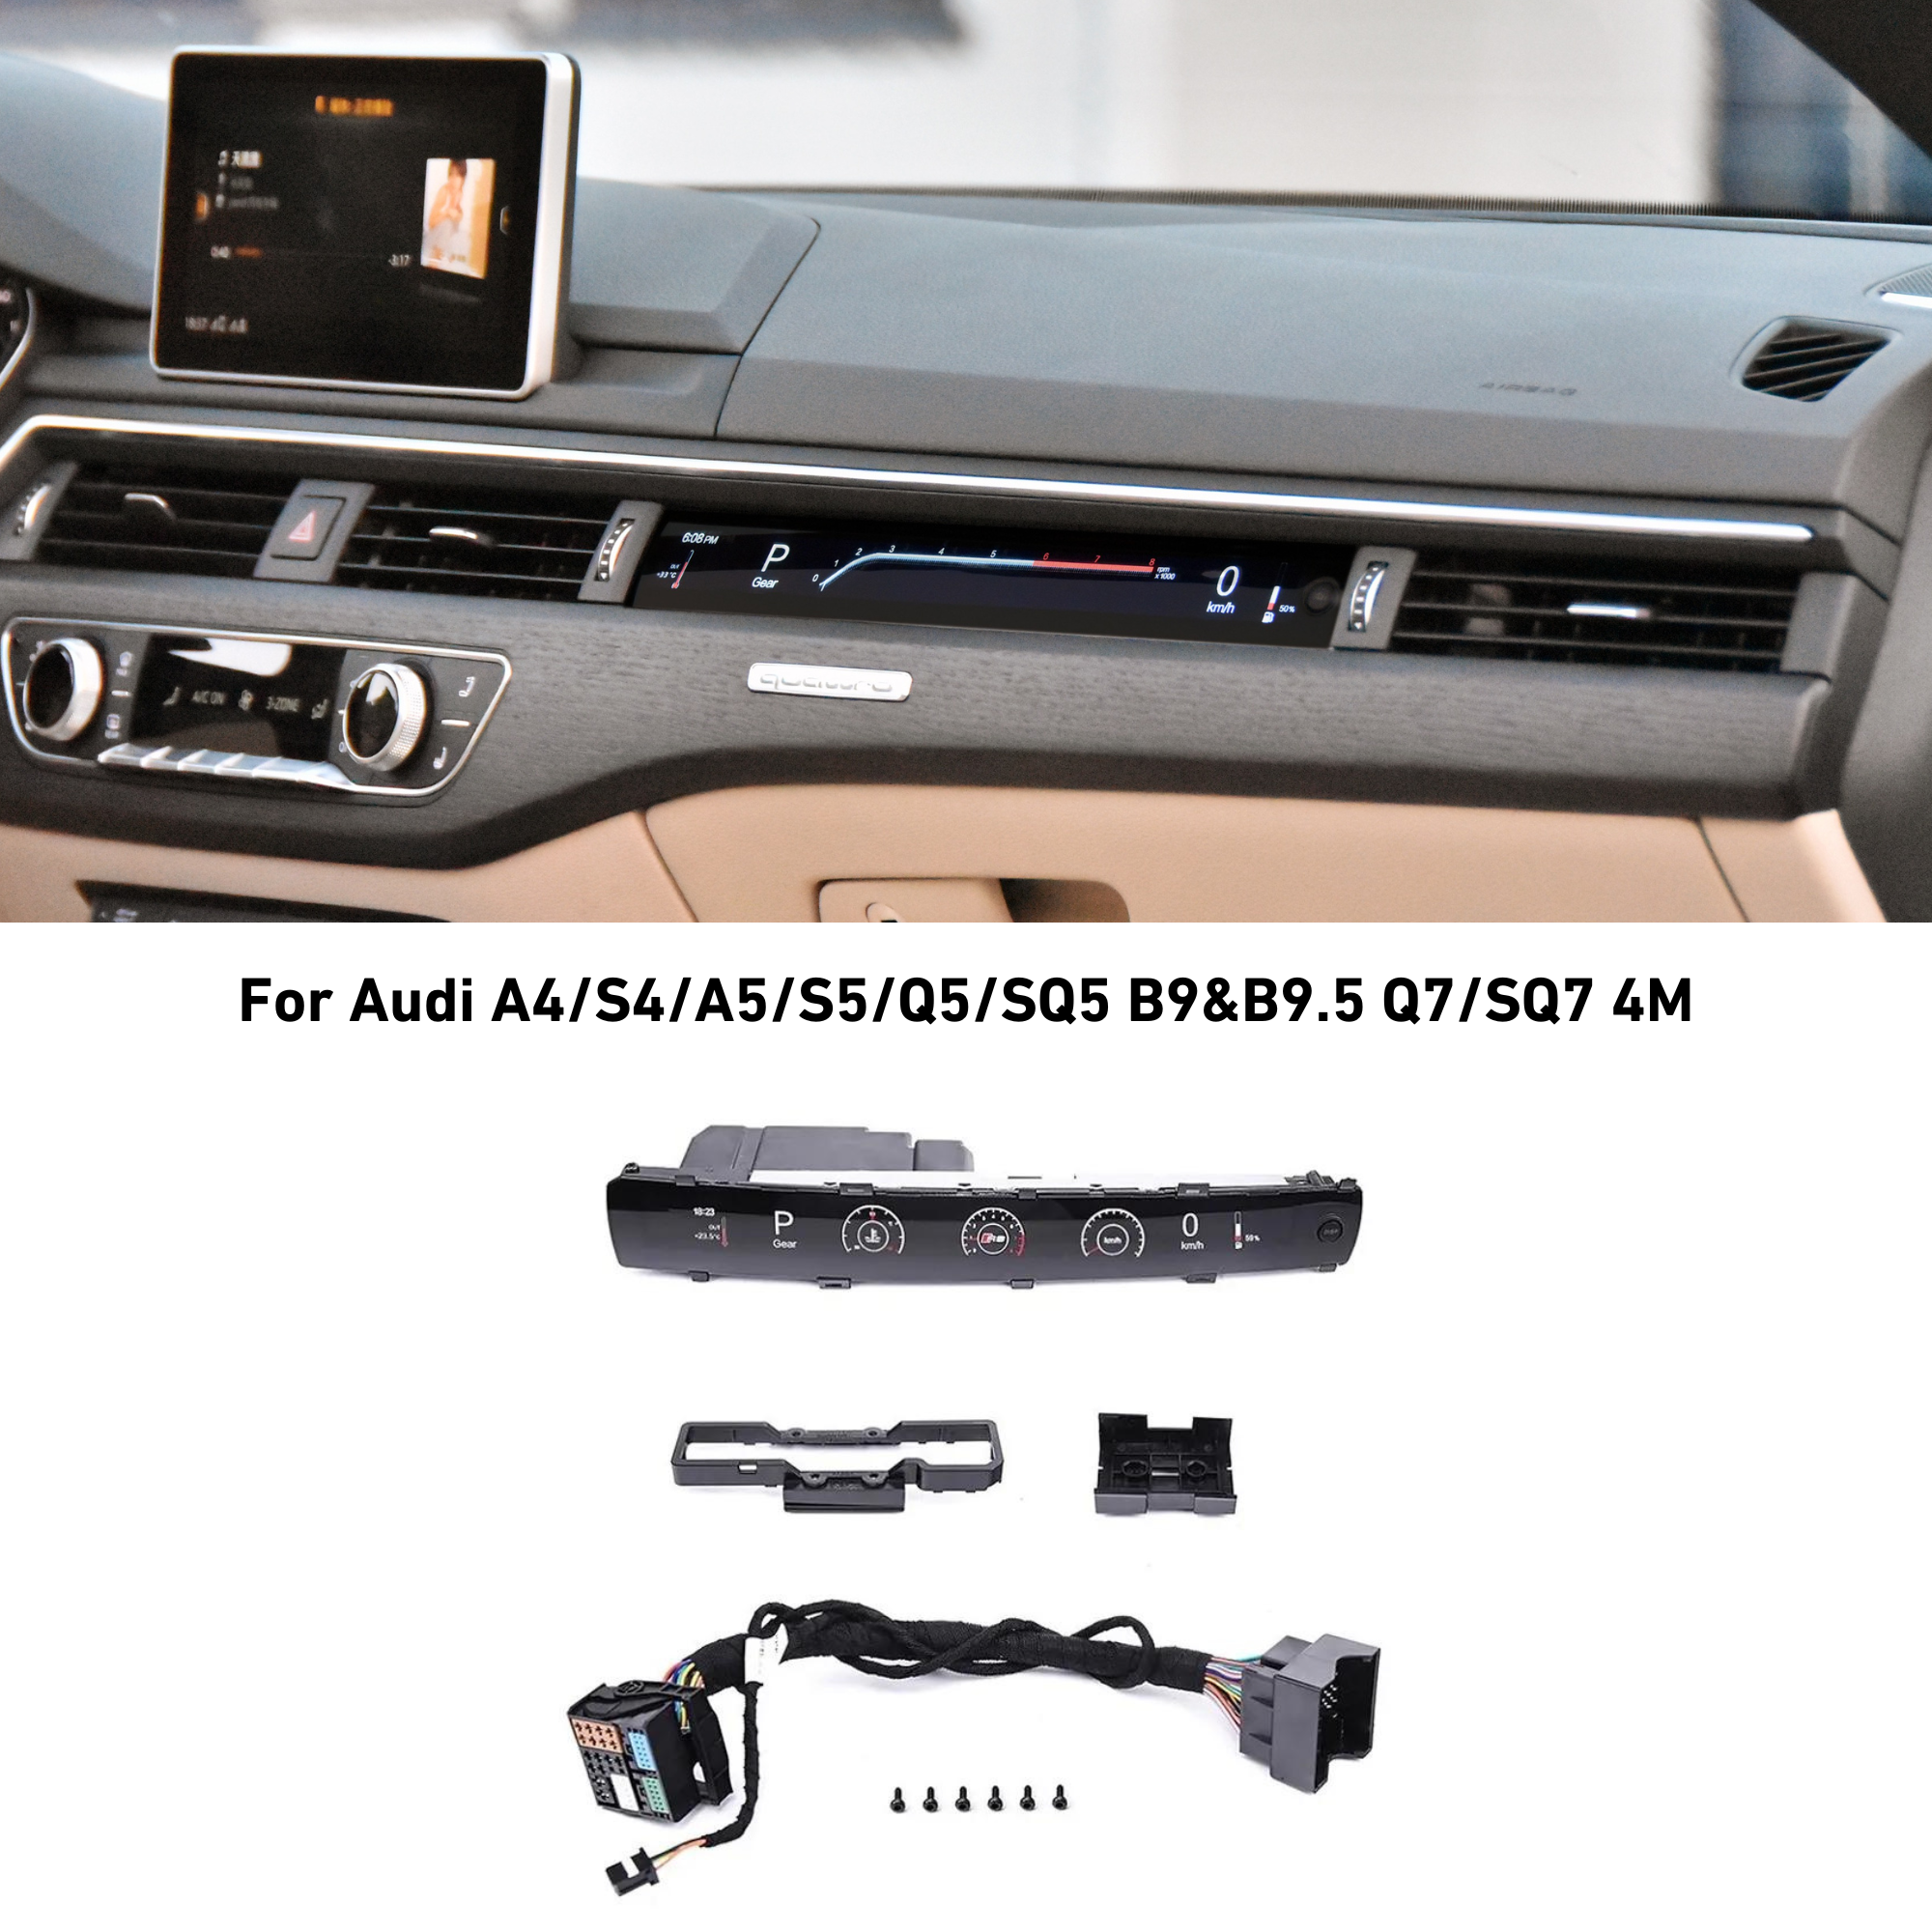 Audi Passenger Sport Display for B9 A4/A5/Q5/Q7 & S/RS Variants